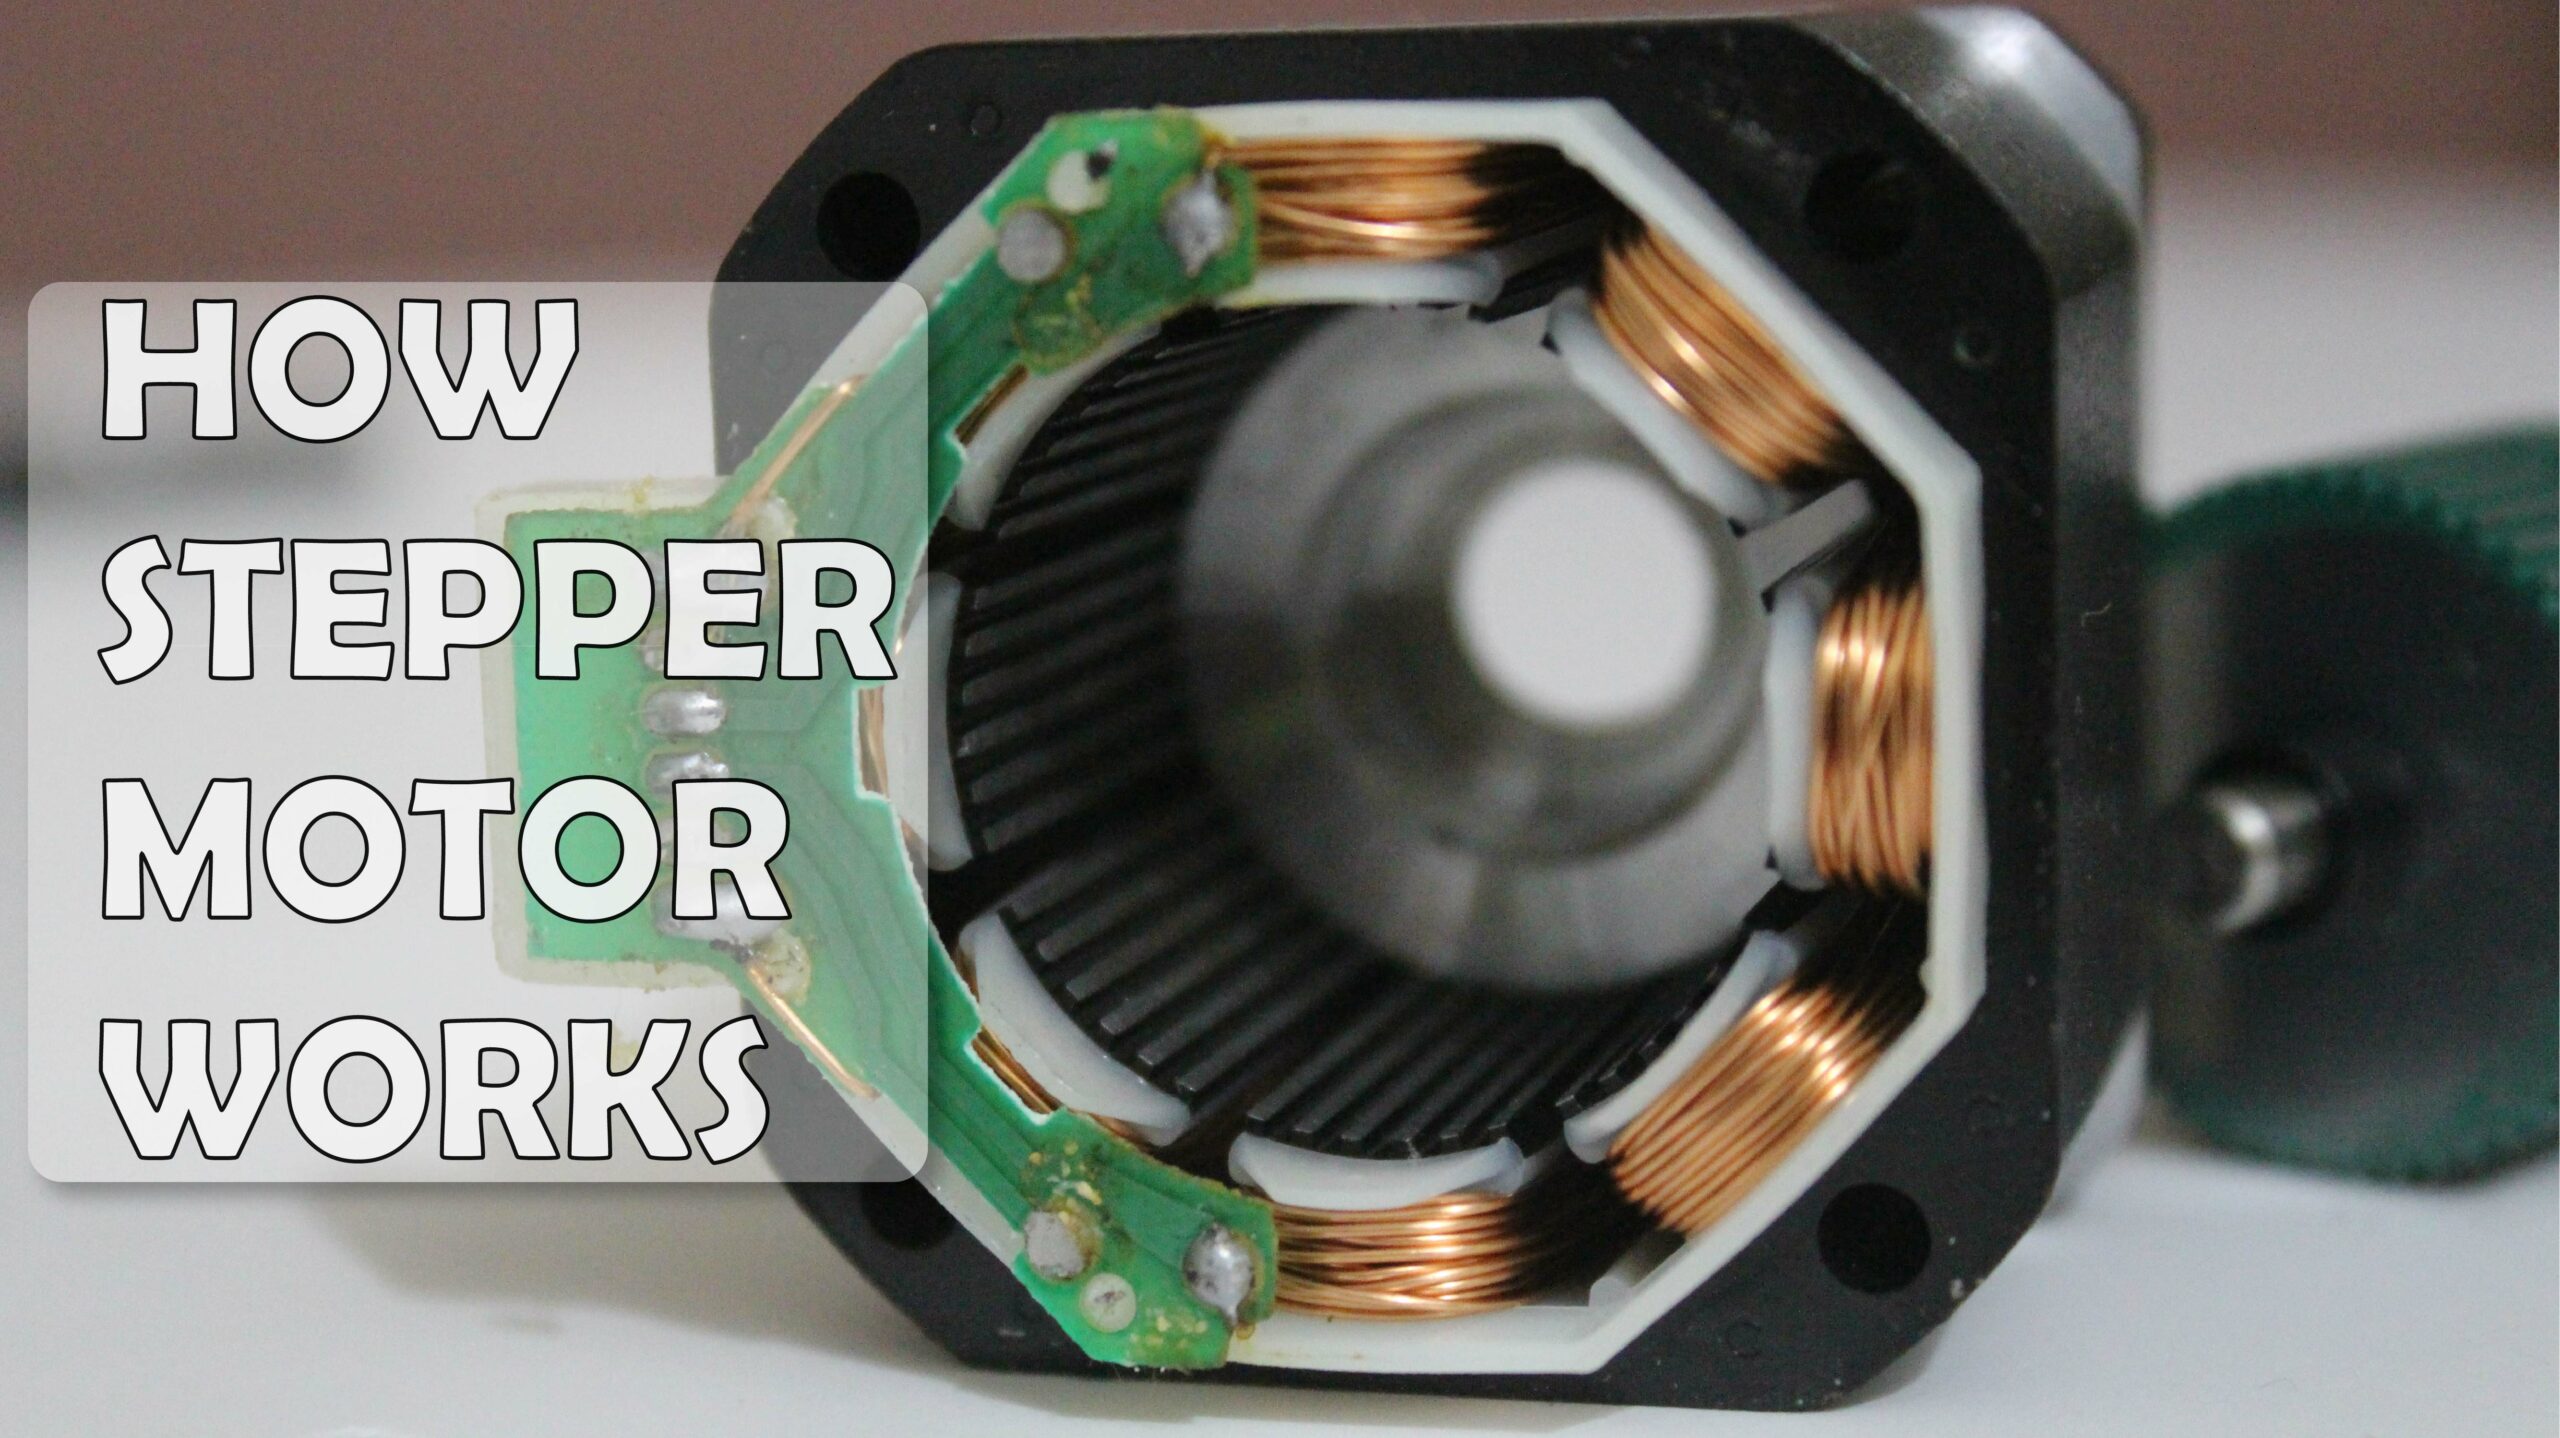 How stepper motor works - Electric DIY Lab